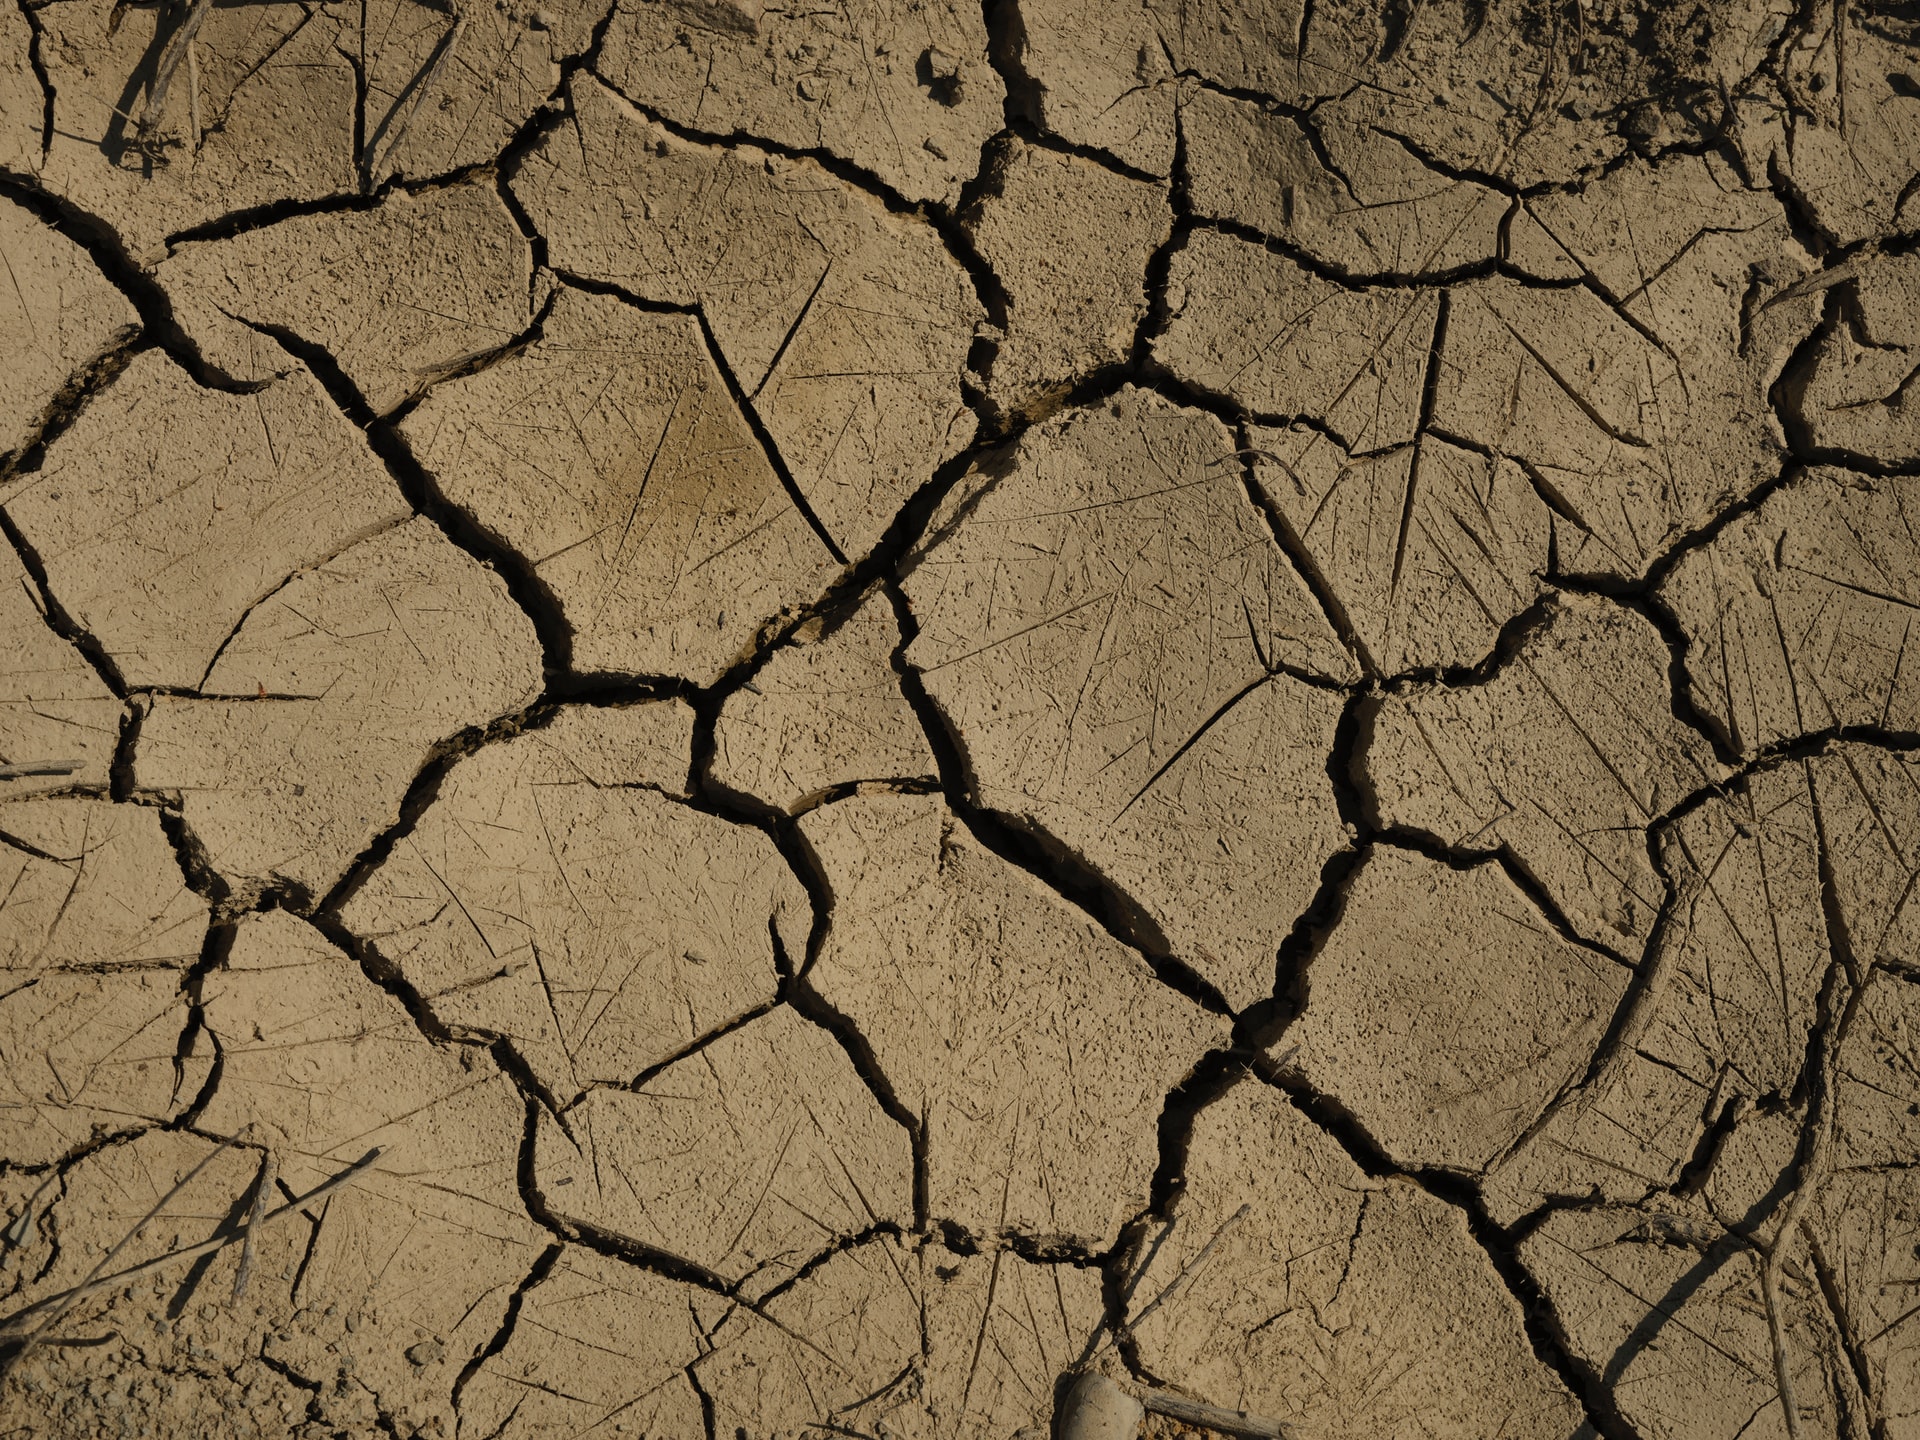 Dry soil surface